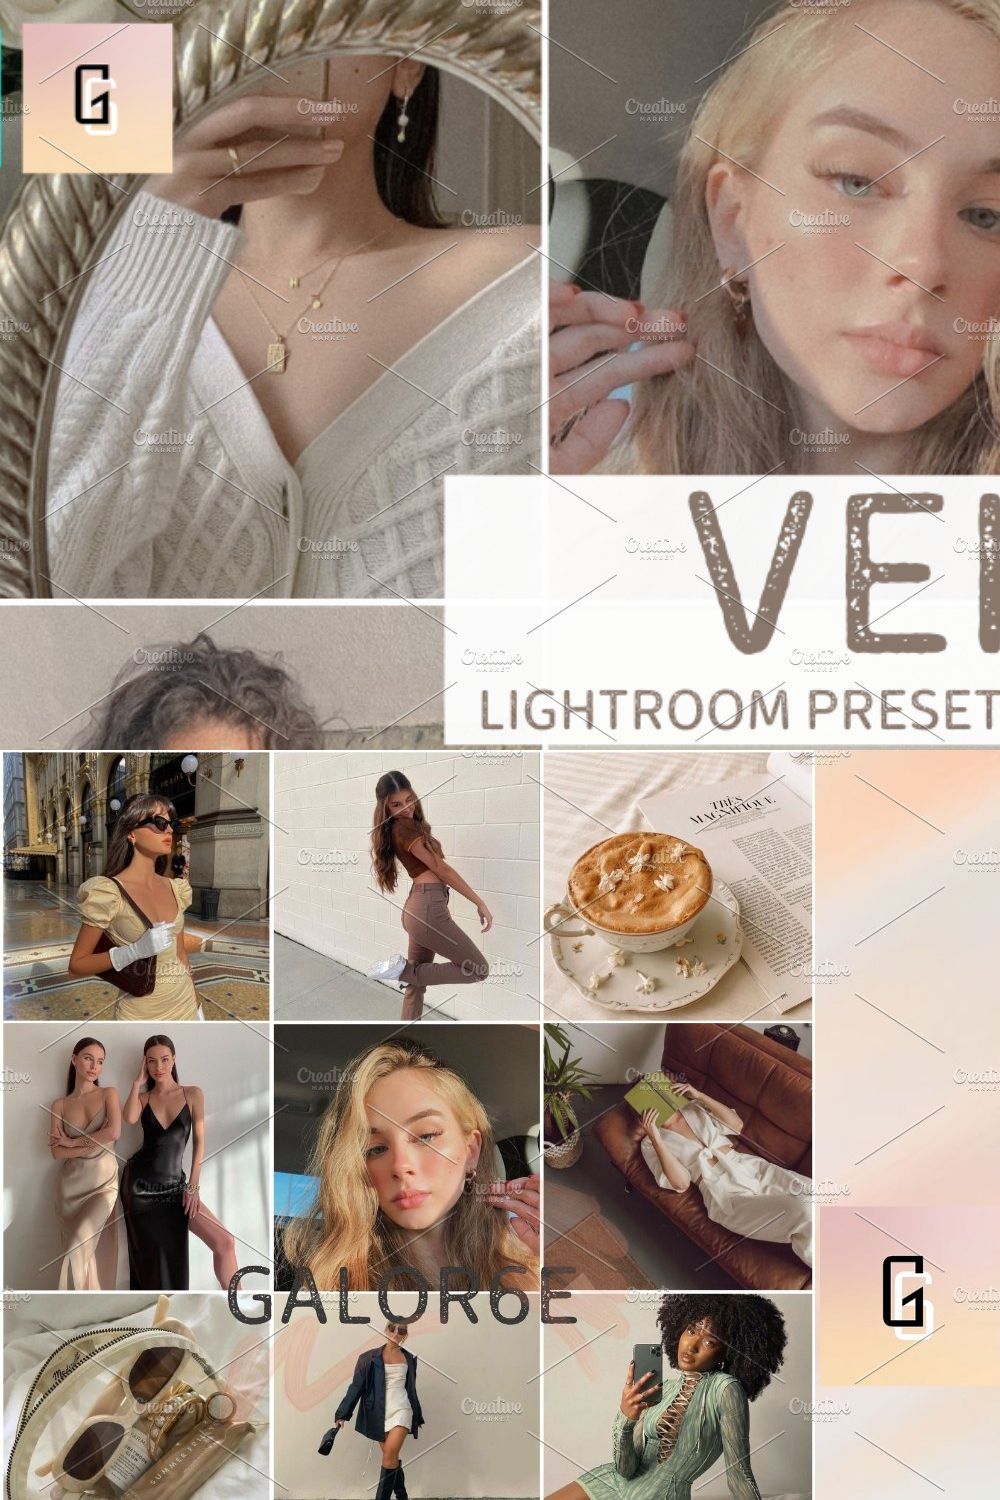 Lightroom Preset VEIL by GALOR6E pinterest preview image.